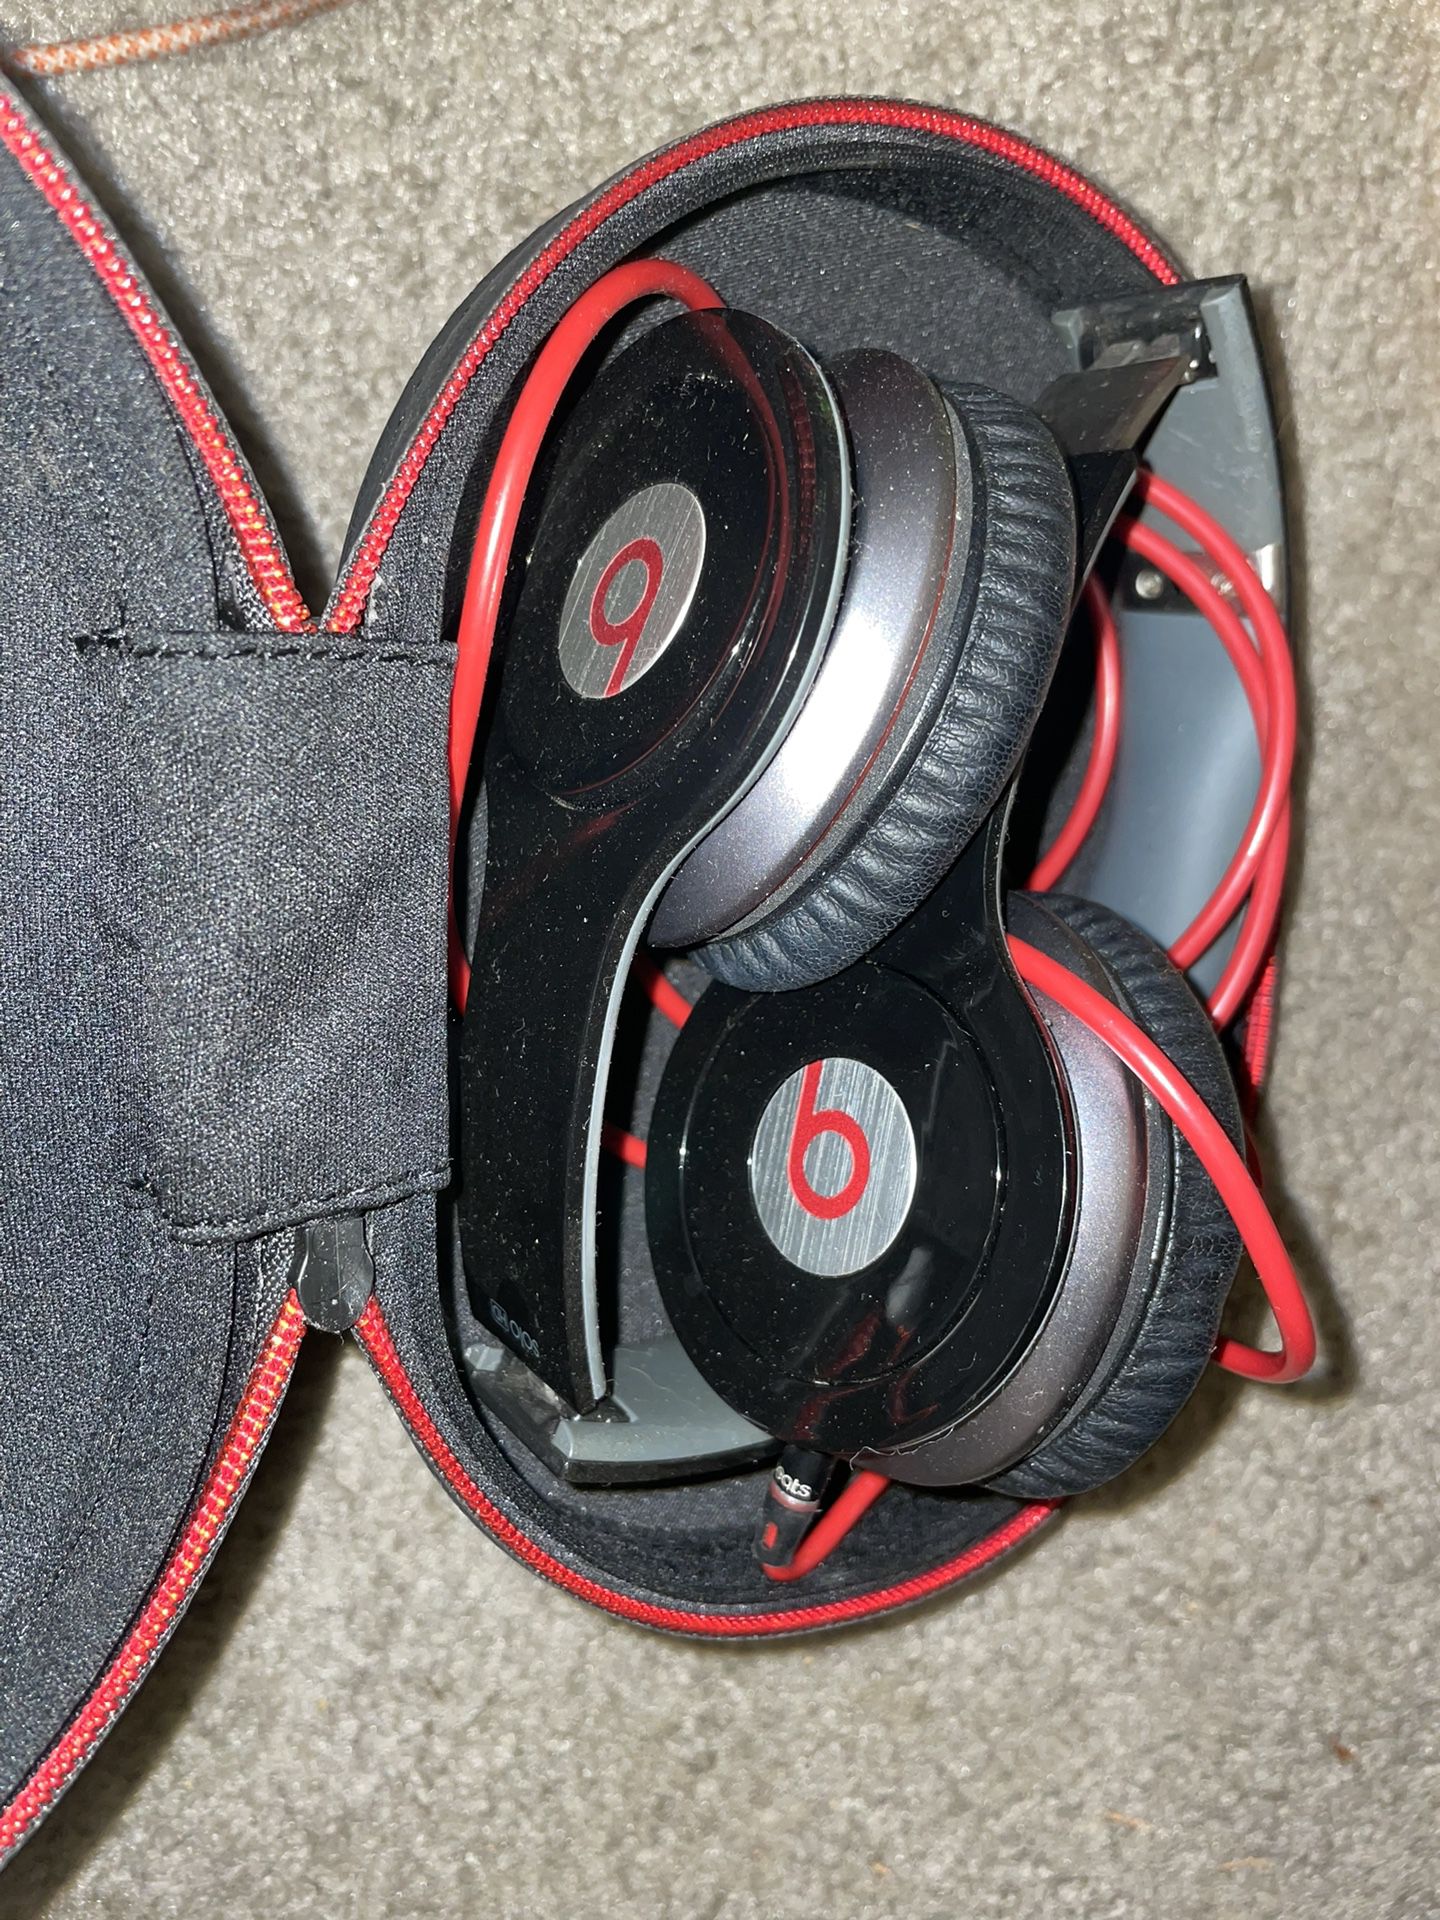 Beats by Dr. Dre Studio3 Wireless Over-Ear Headphones